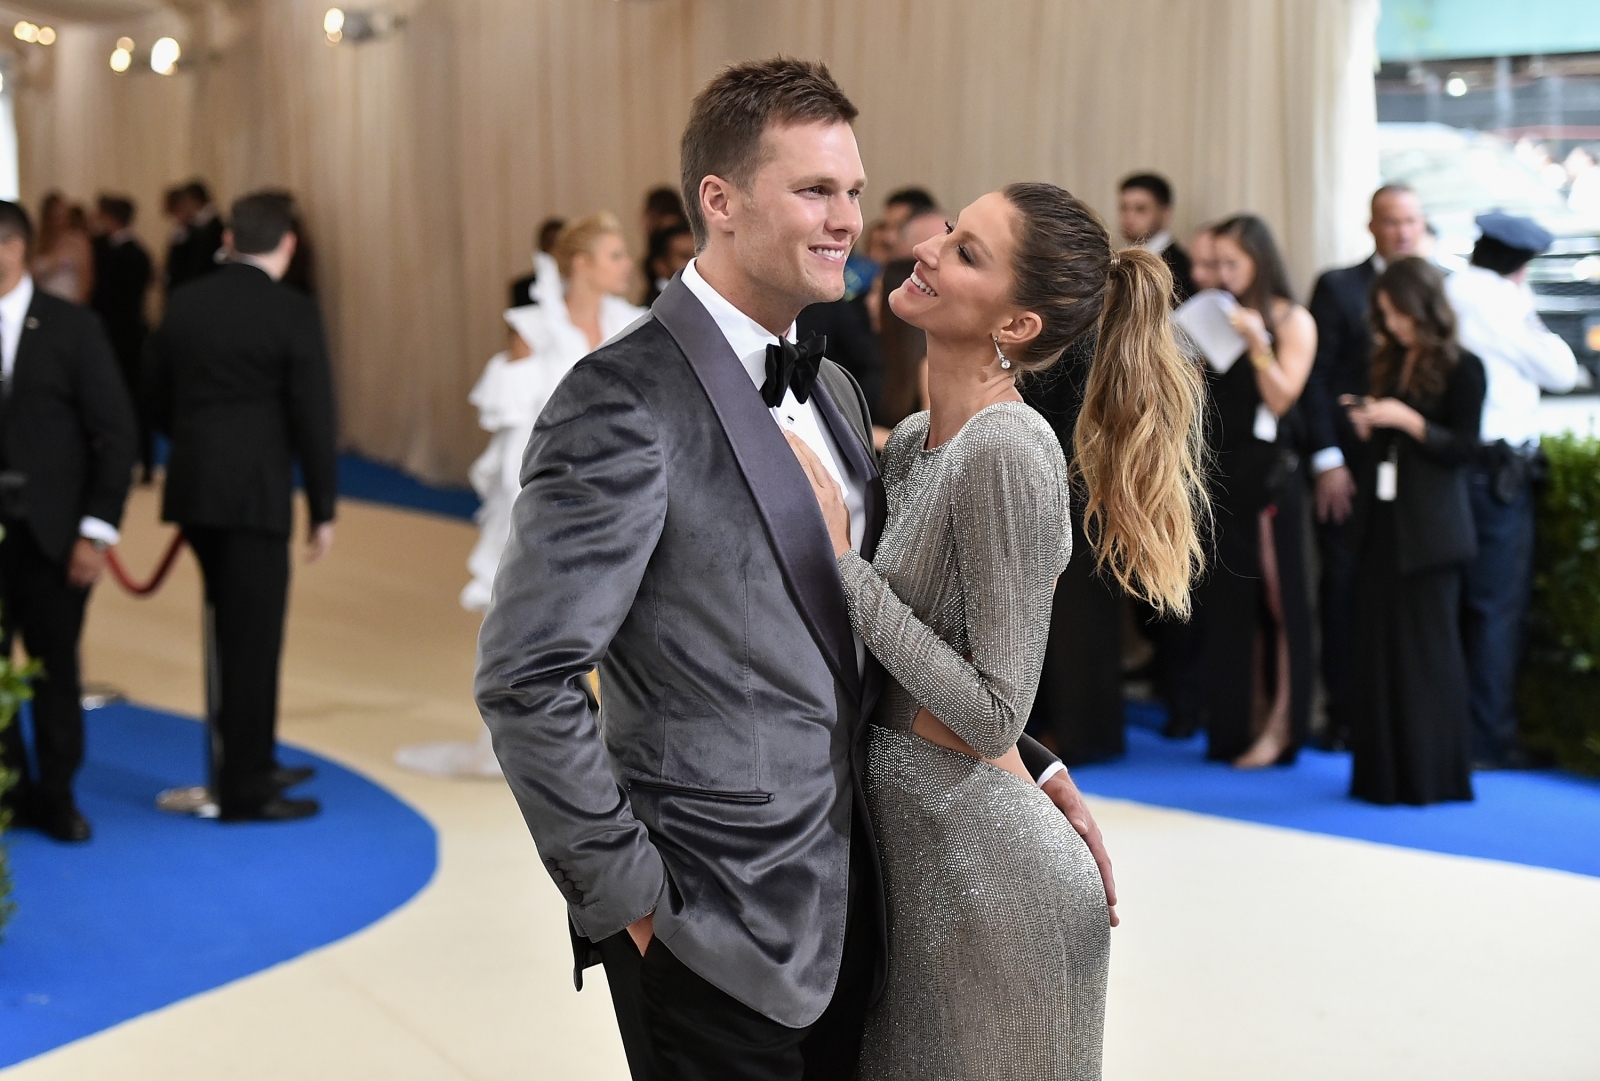 Why Nfl Star Tom Brady Is Avoiding Sex With Supermodel Wife Gisele Bündchen 0702